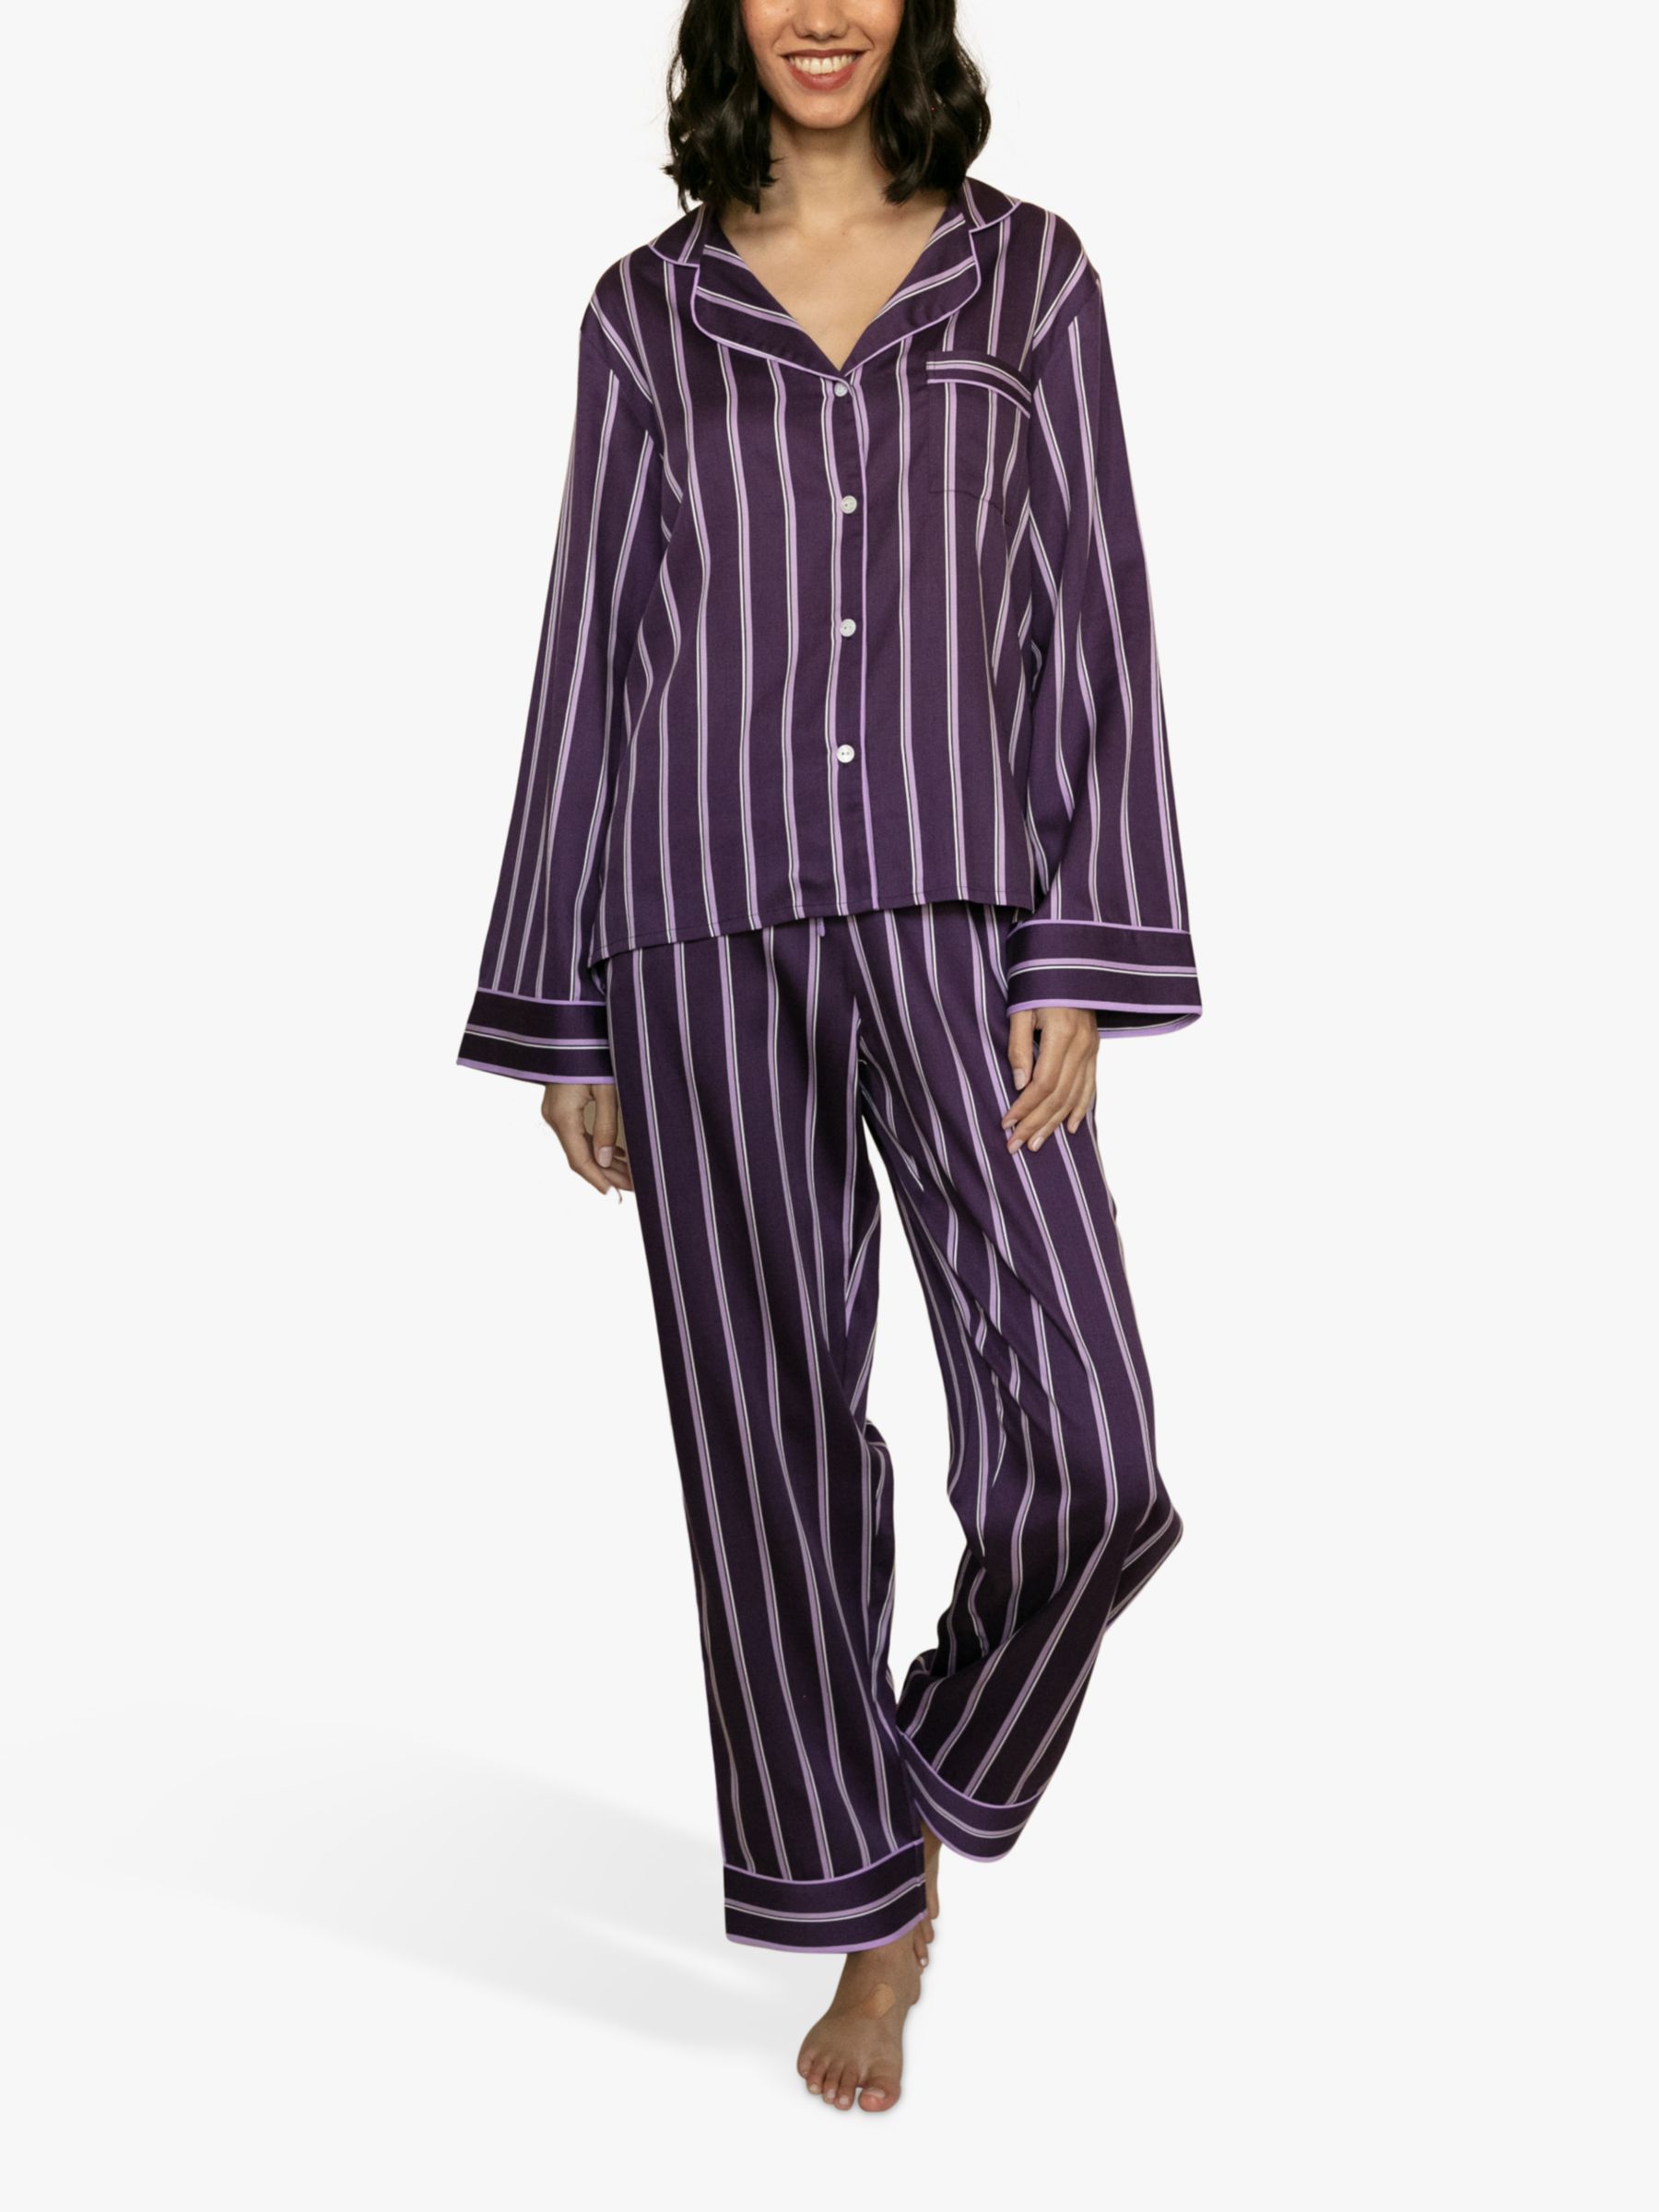 Fable & Eve Stripe Print Pyjama Set, Purple, 8